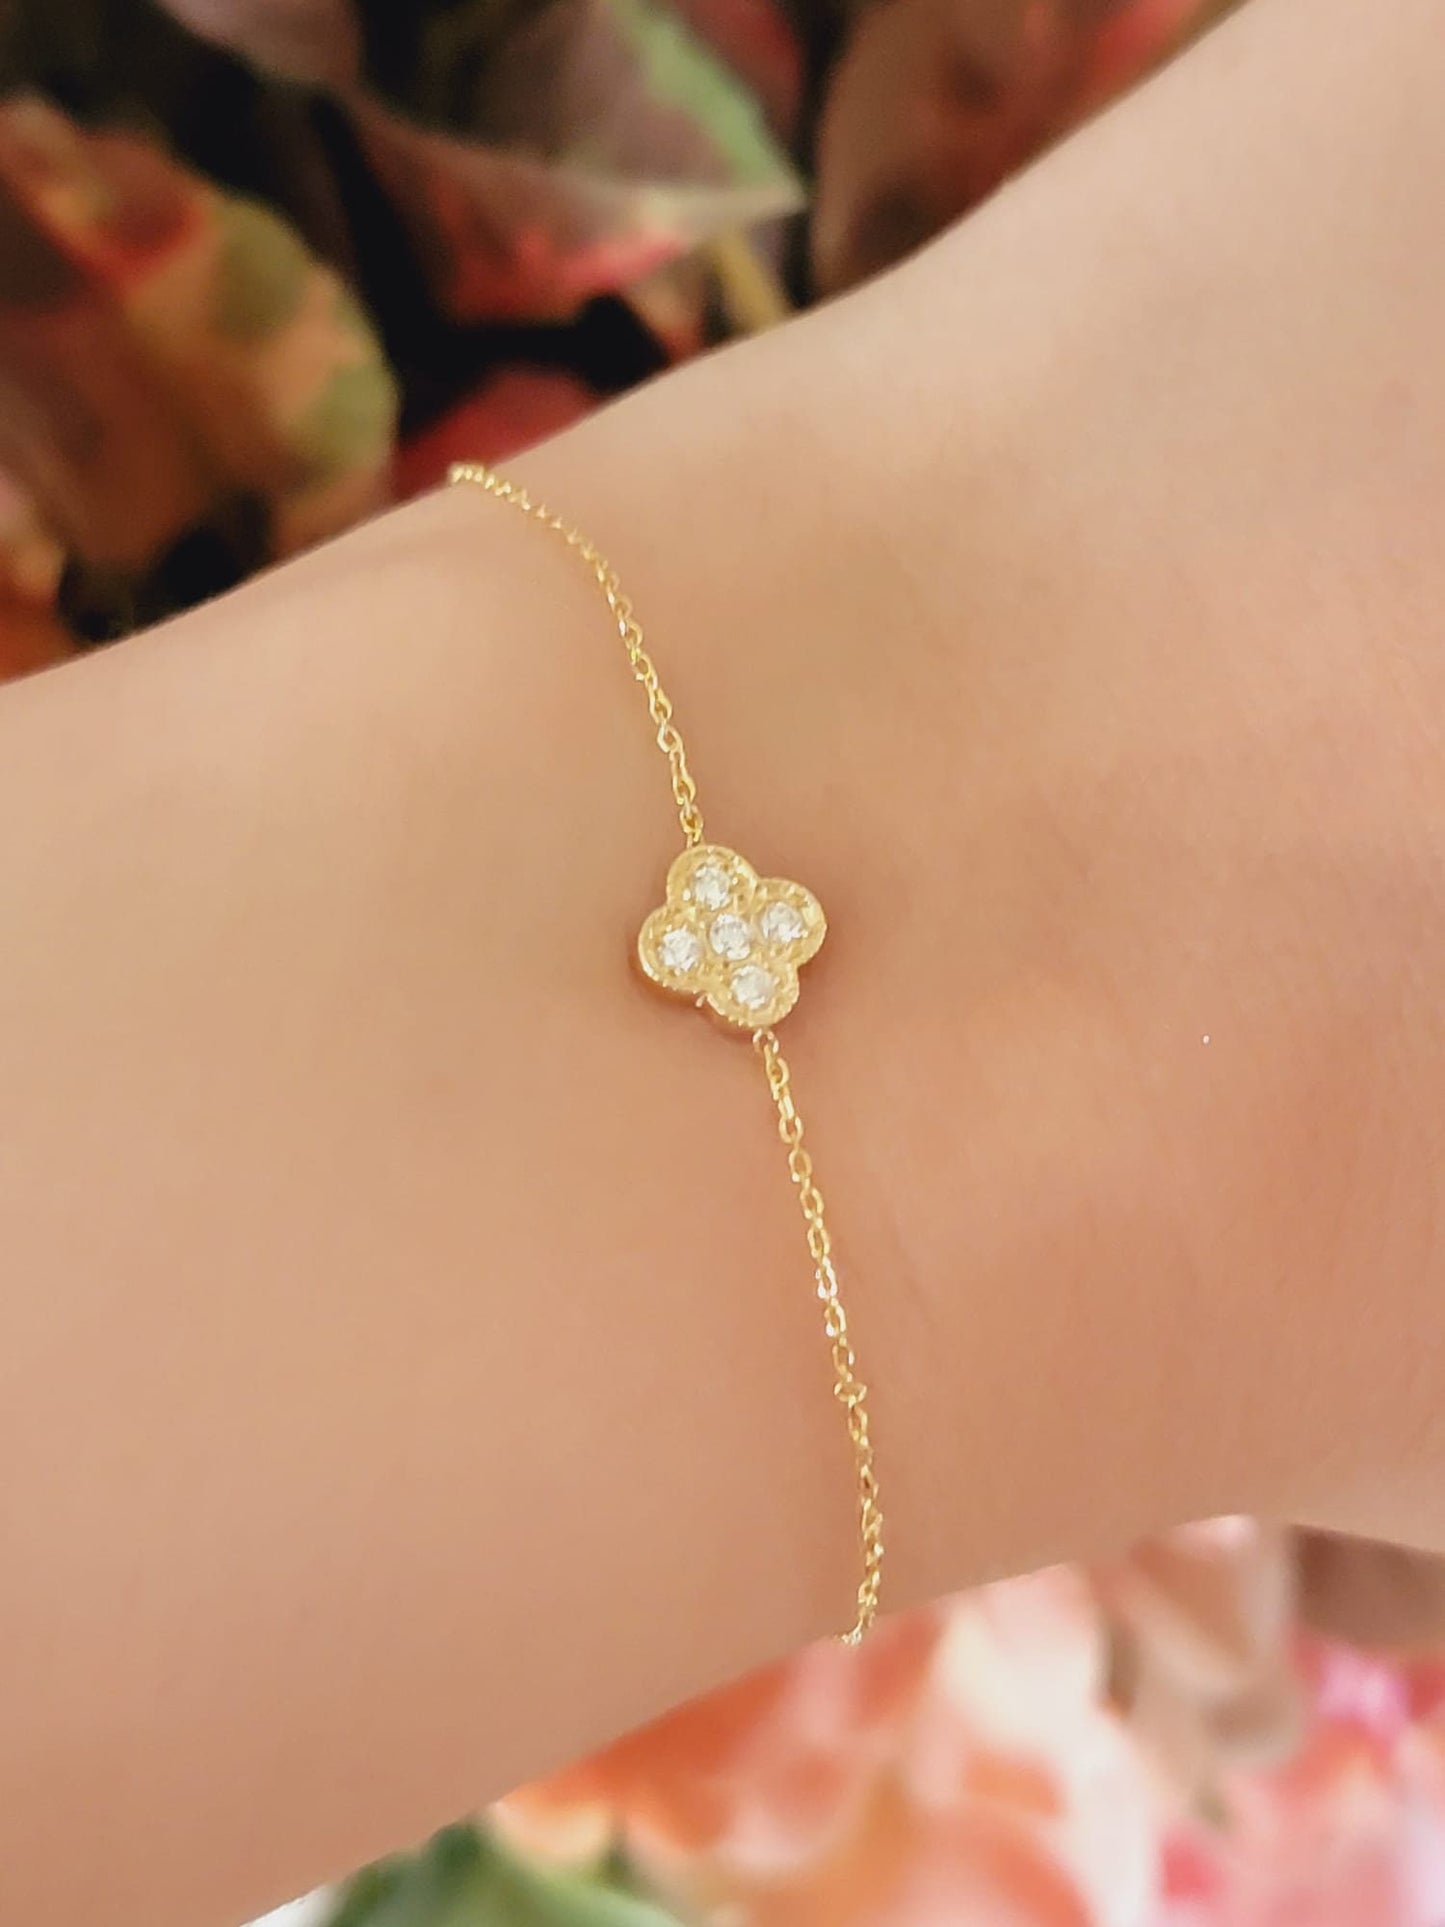 Diamond Clover Bracelet, 14K Gold Four Leaf Clover Diamond Bracelet, Sparkling Natural Diamond Flower Chain, Anniversary Floral Jewelry